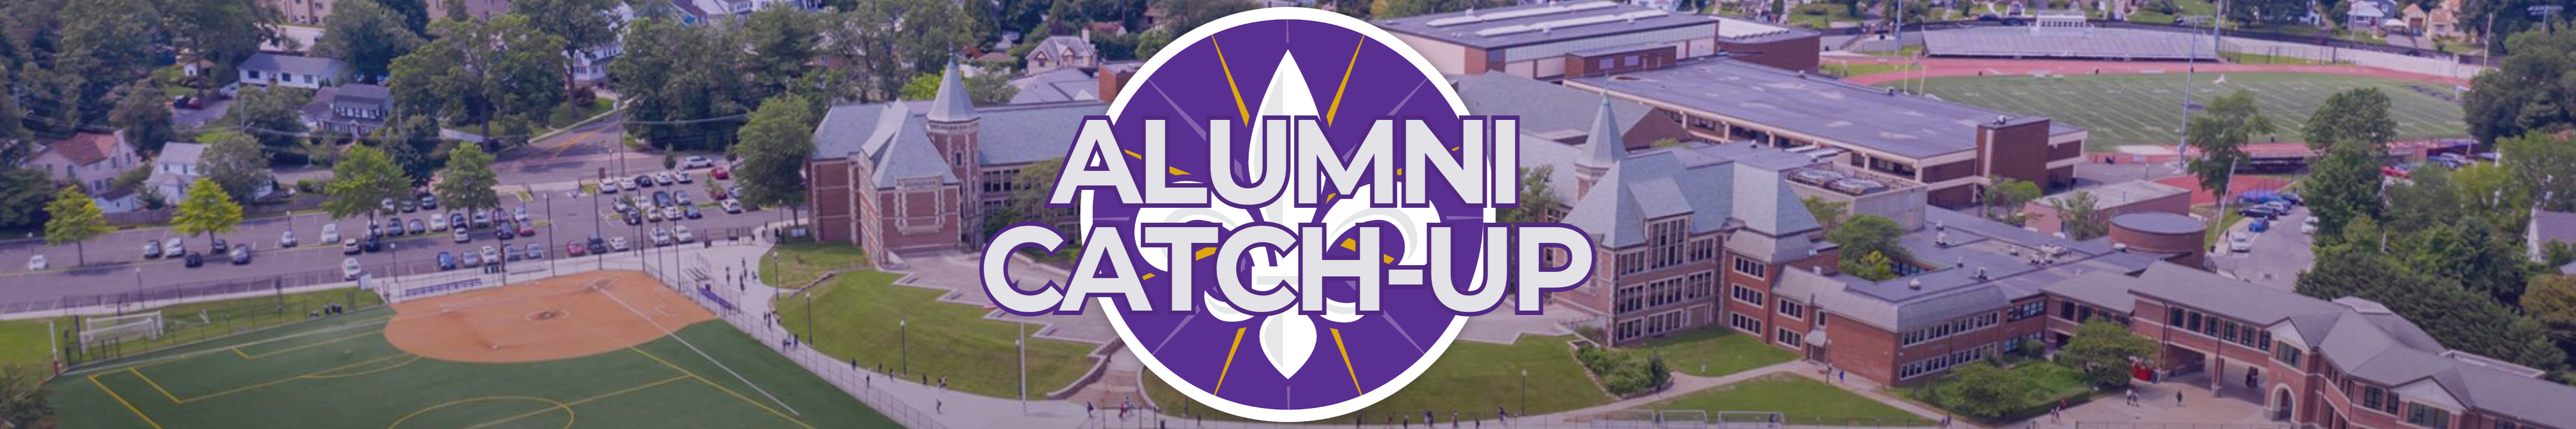 alumni catchup banner